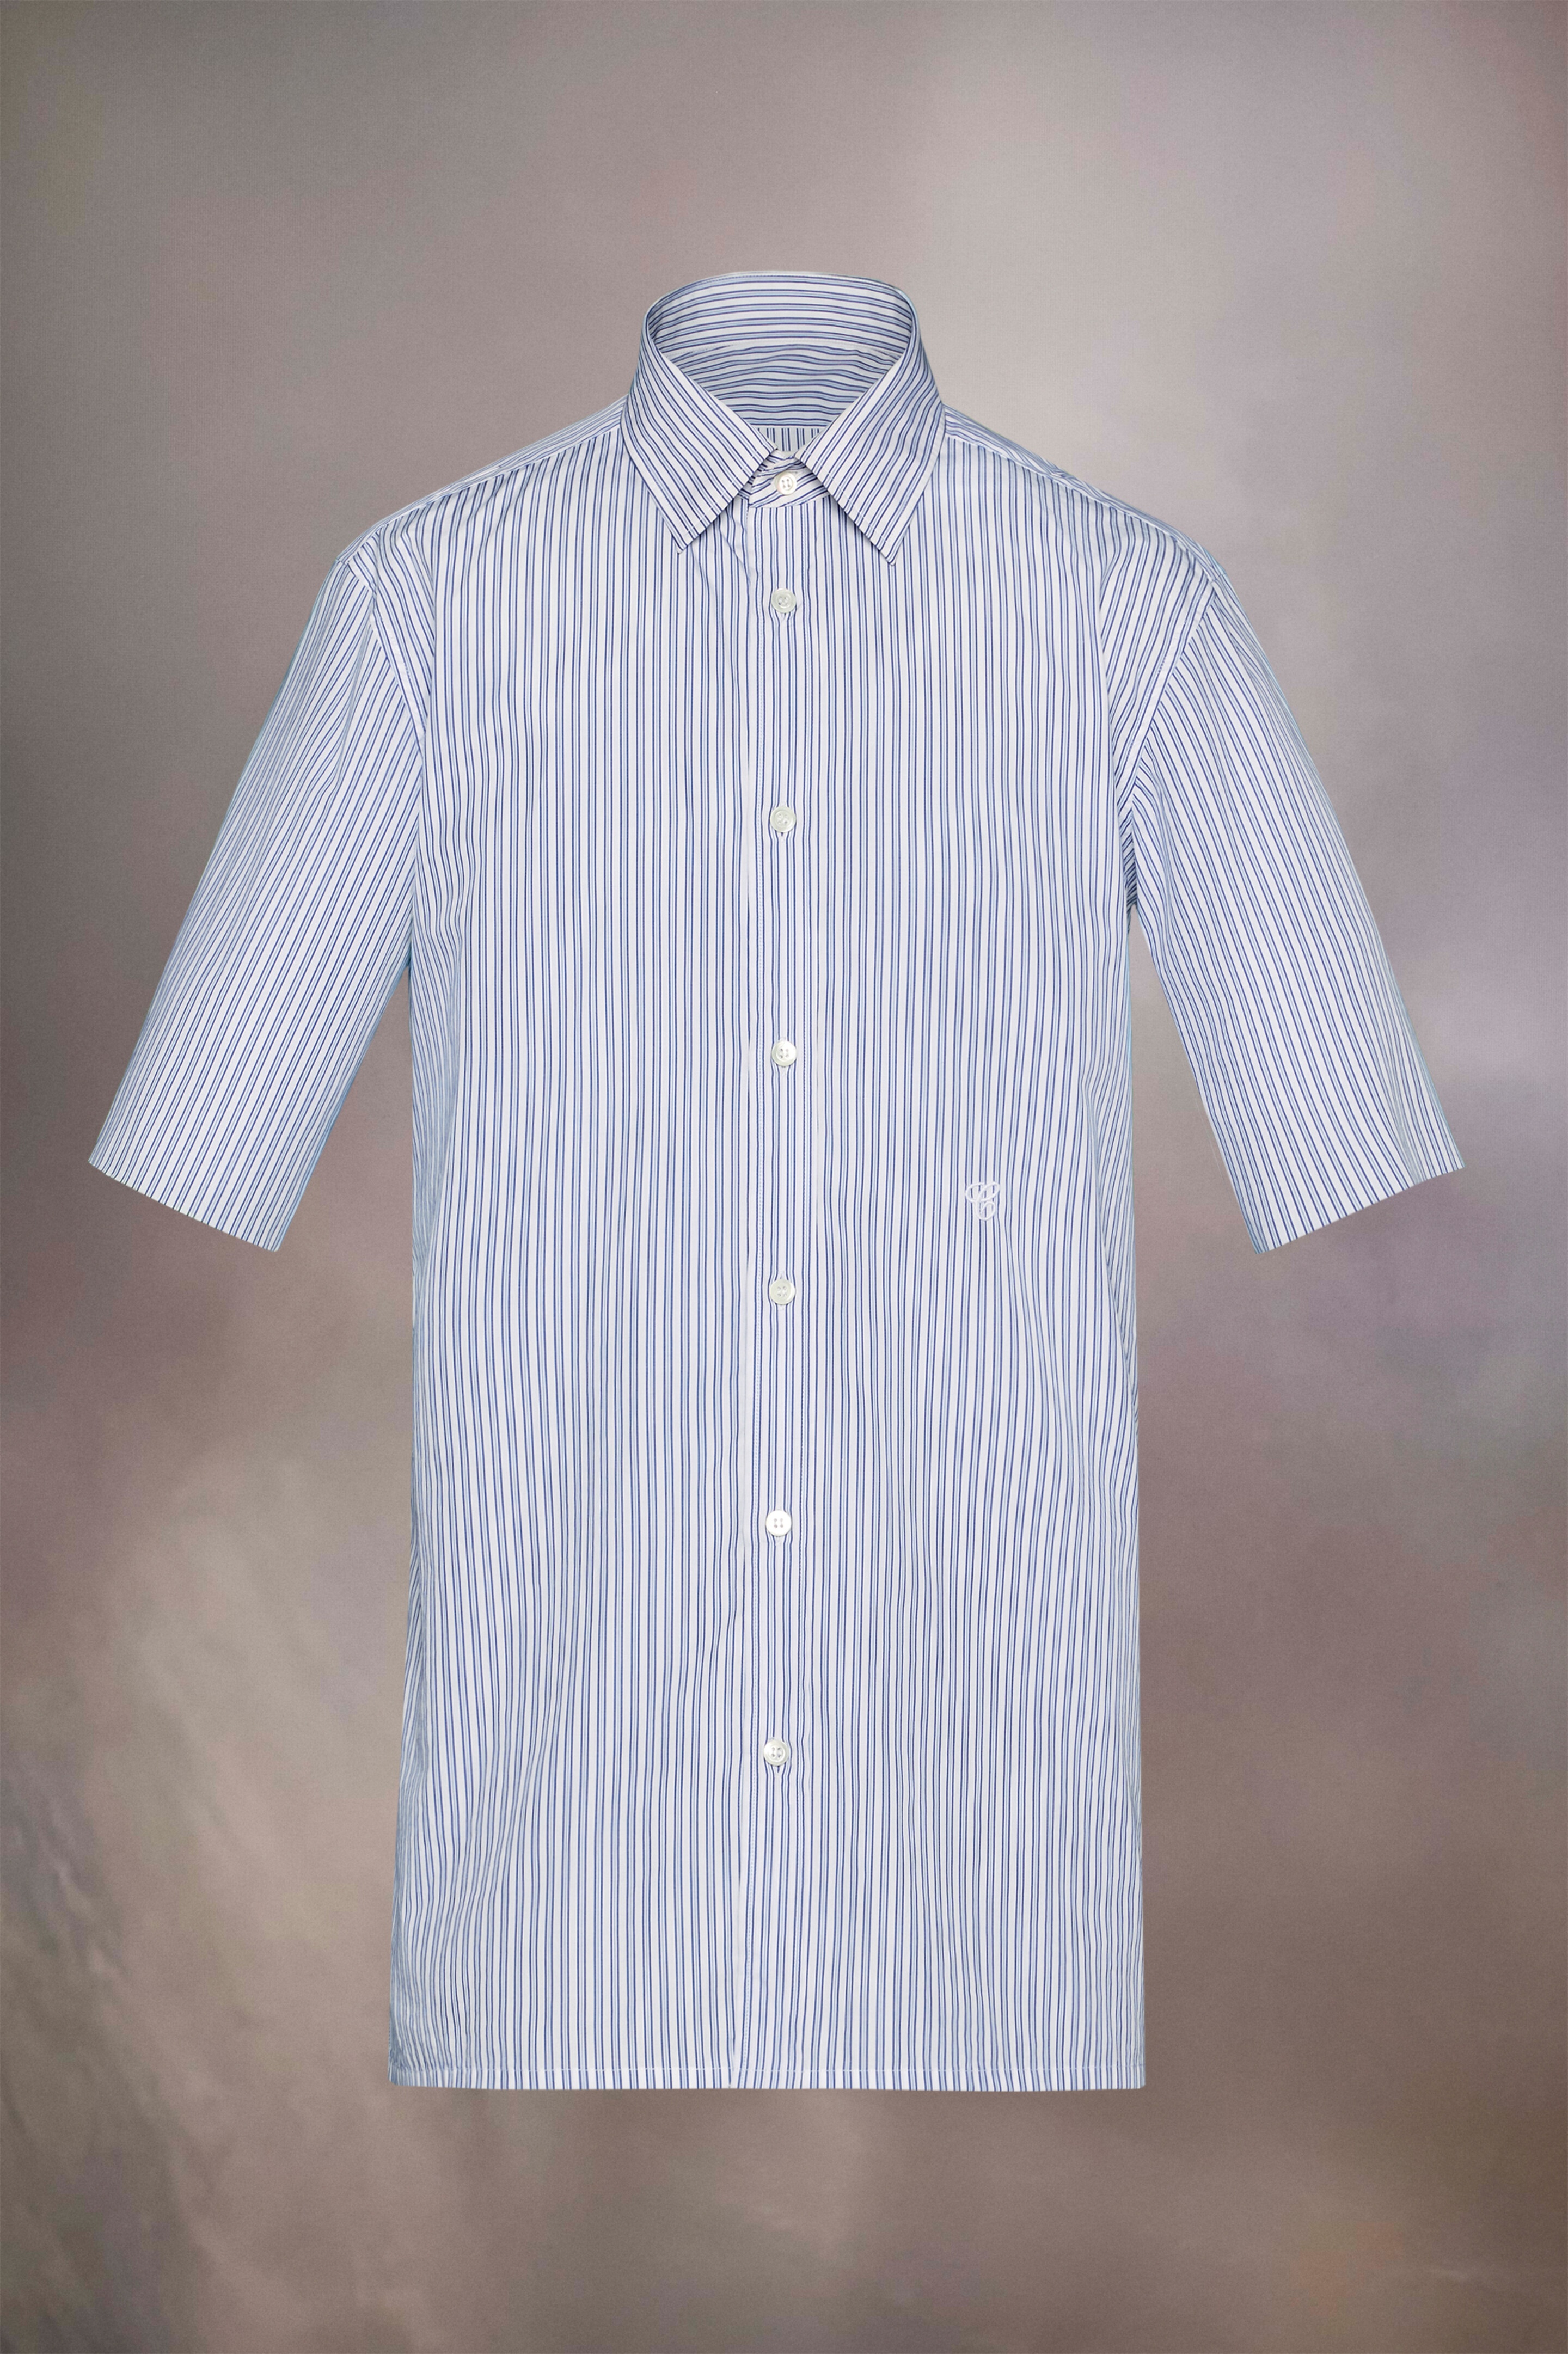 C striped shirt - 1